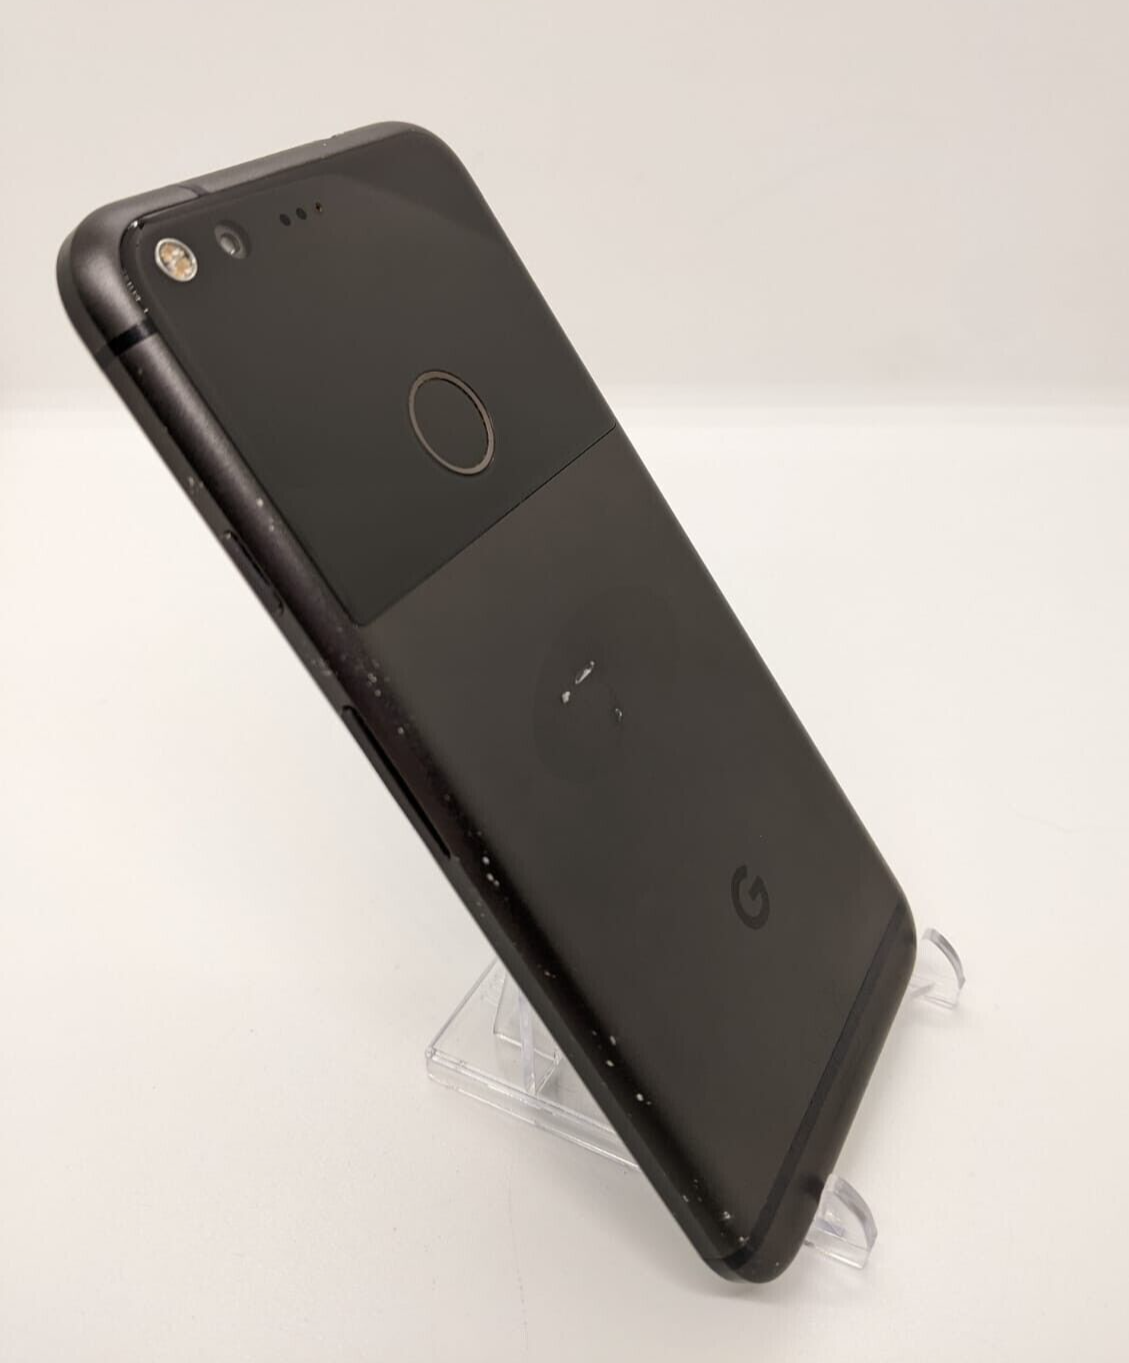 Google Pixel 128GB Factory Unlocked 4GLTE Black Smartphone Unlockable Bootloader